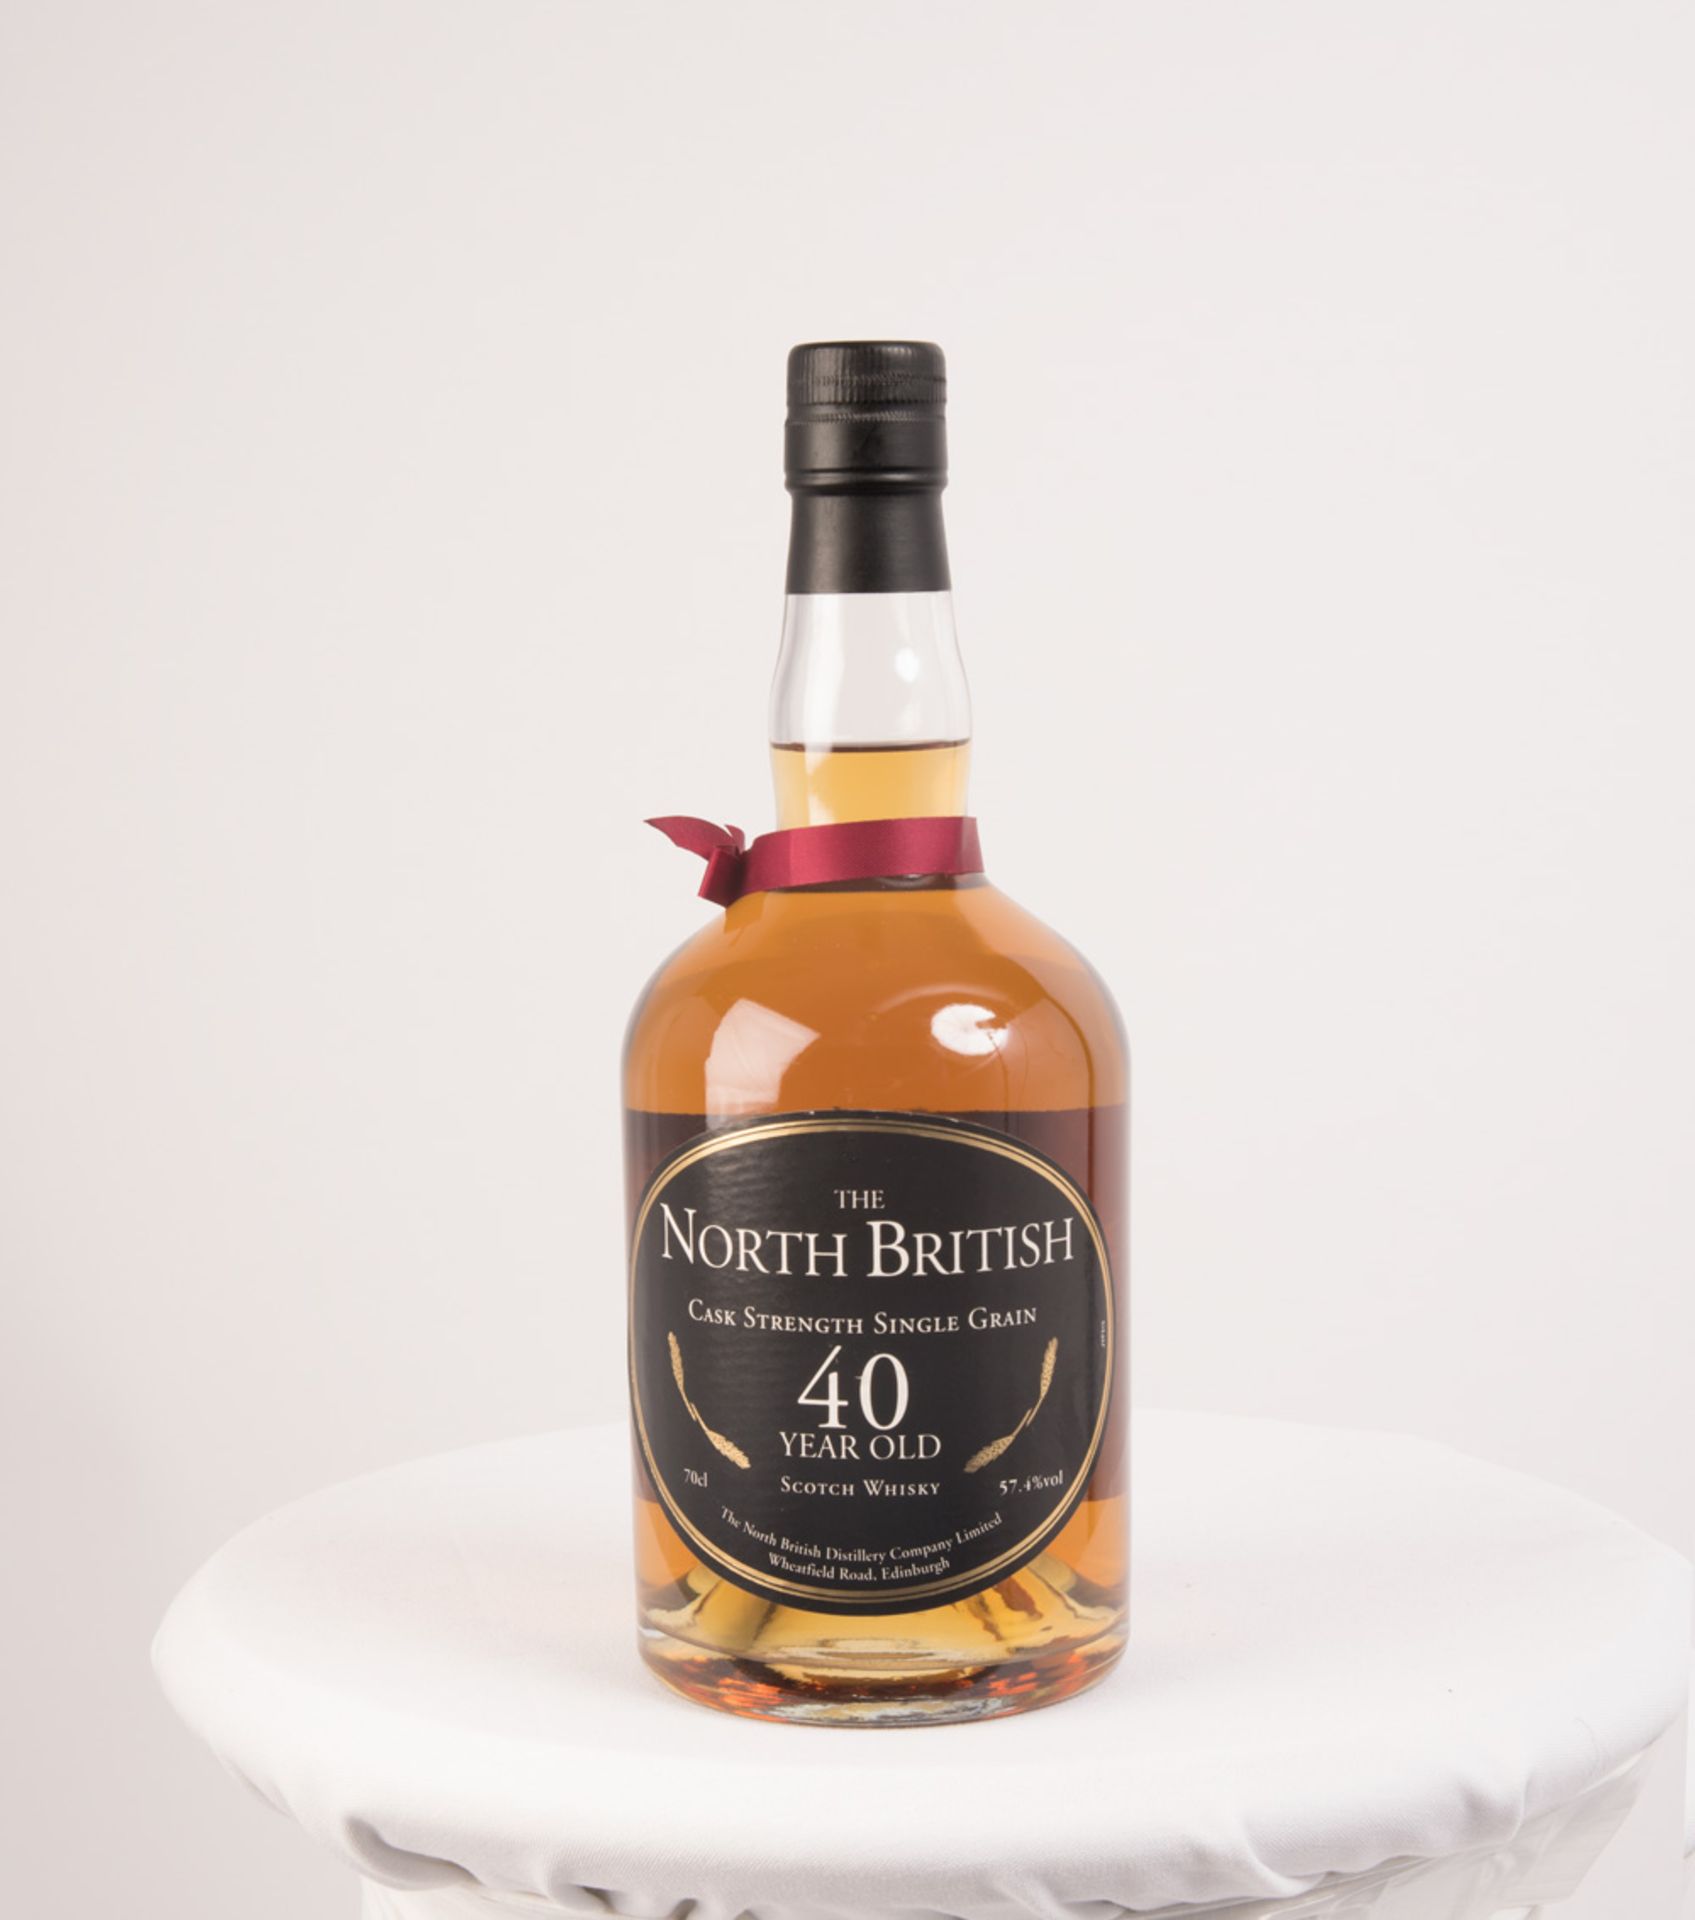 THE NORTH BRITISH 40YO - CASK STRENGTH SINGLE GRAIN Single Grain Scotch Whisky. The North British